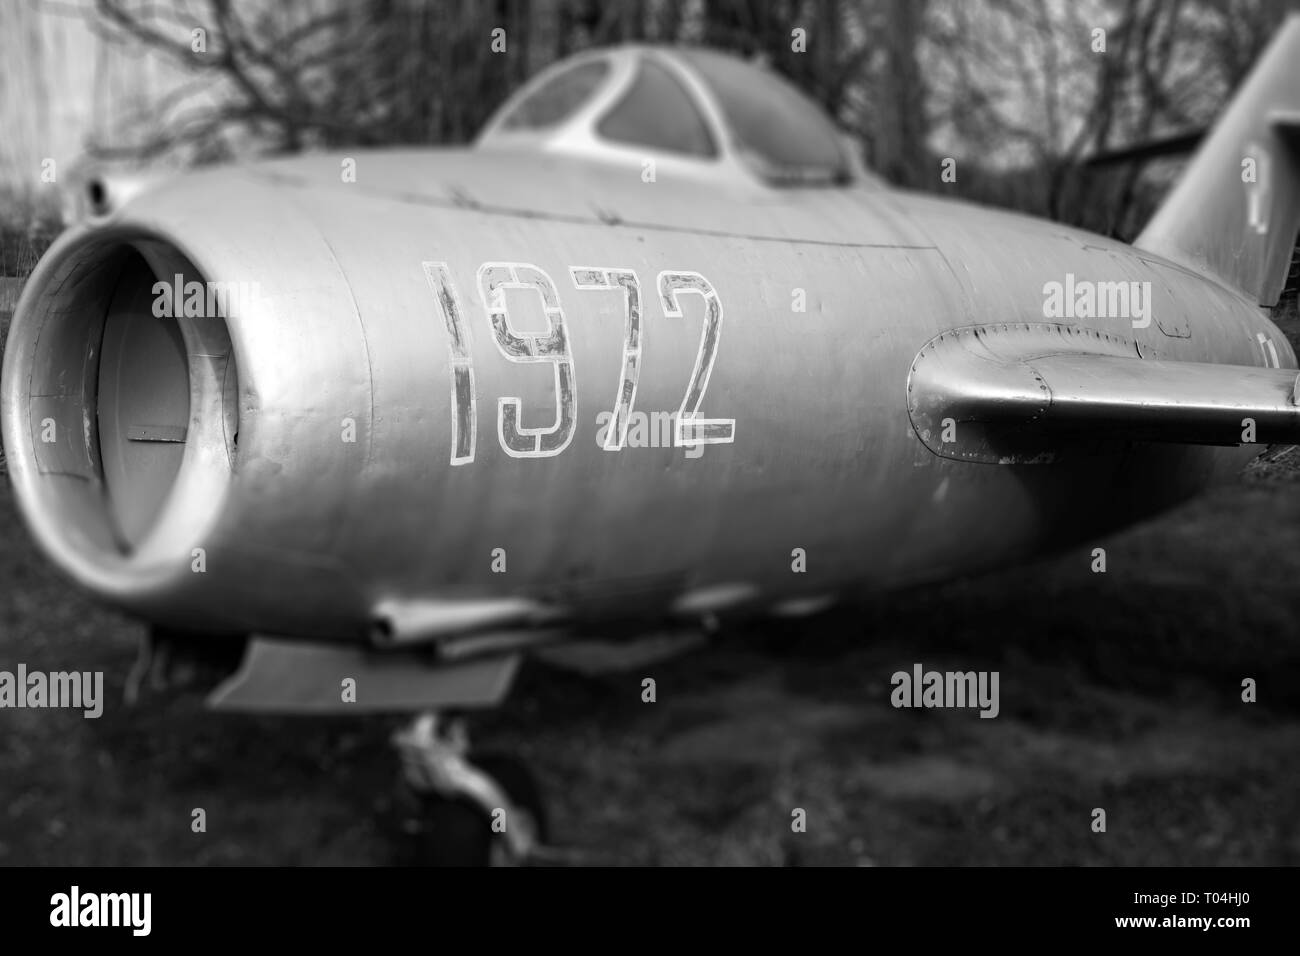 Cold War era Soviet built Mig-15 fighter jet aircraft Stock Photo